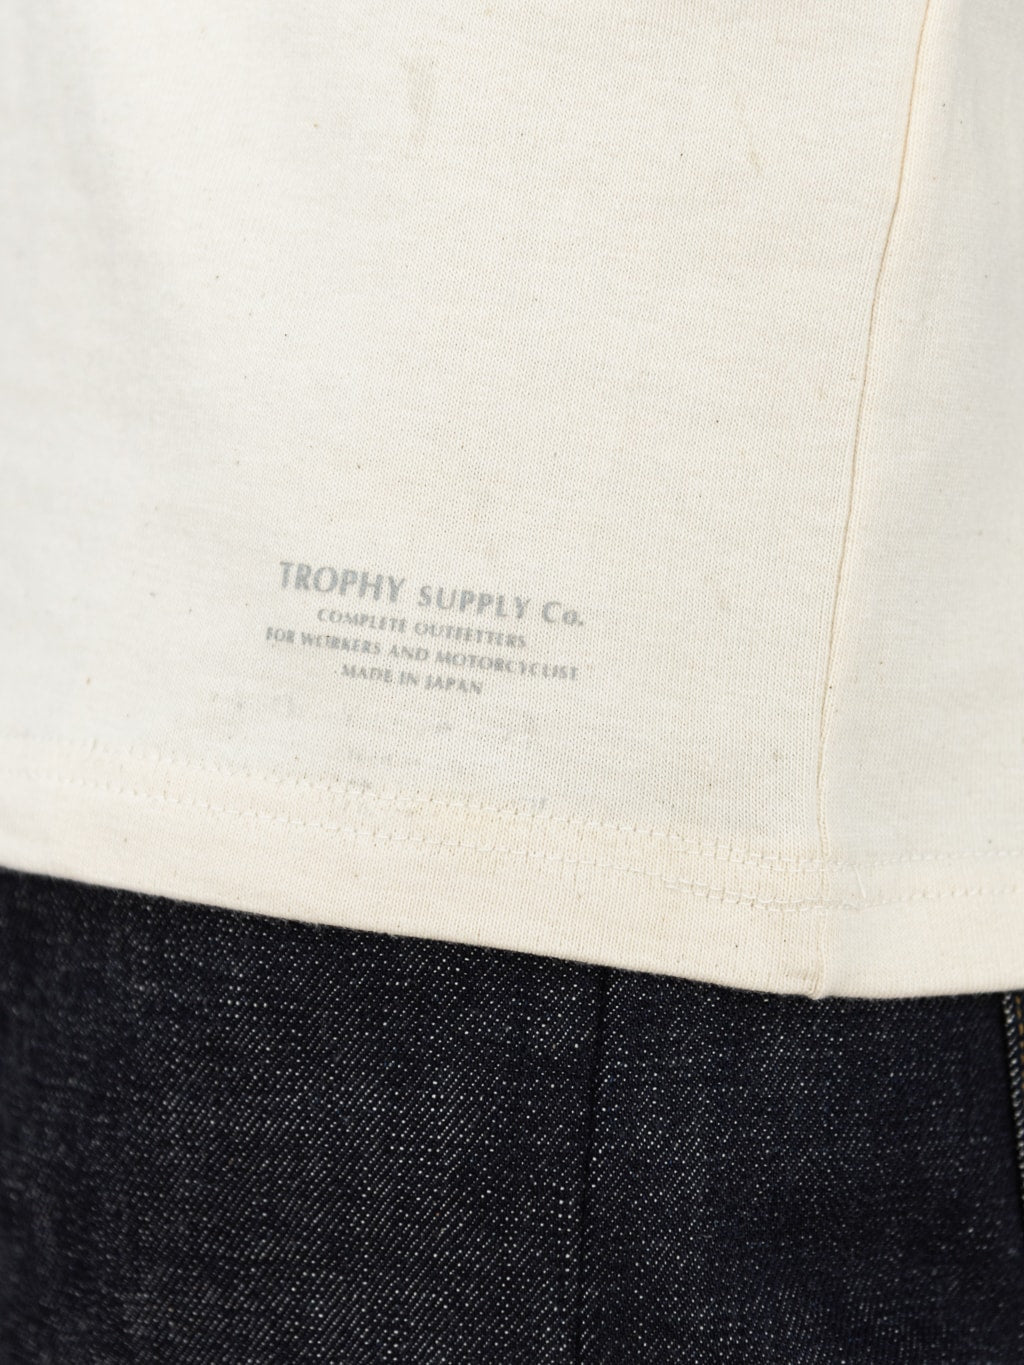 trophy clothing od pocket tee natural printed branding hem